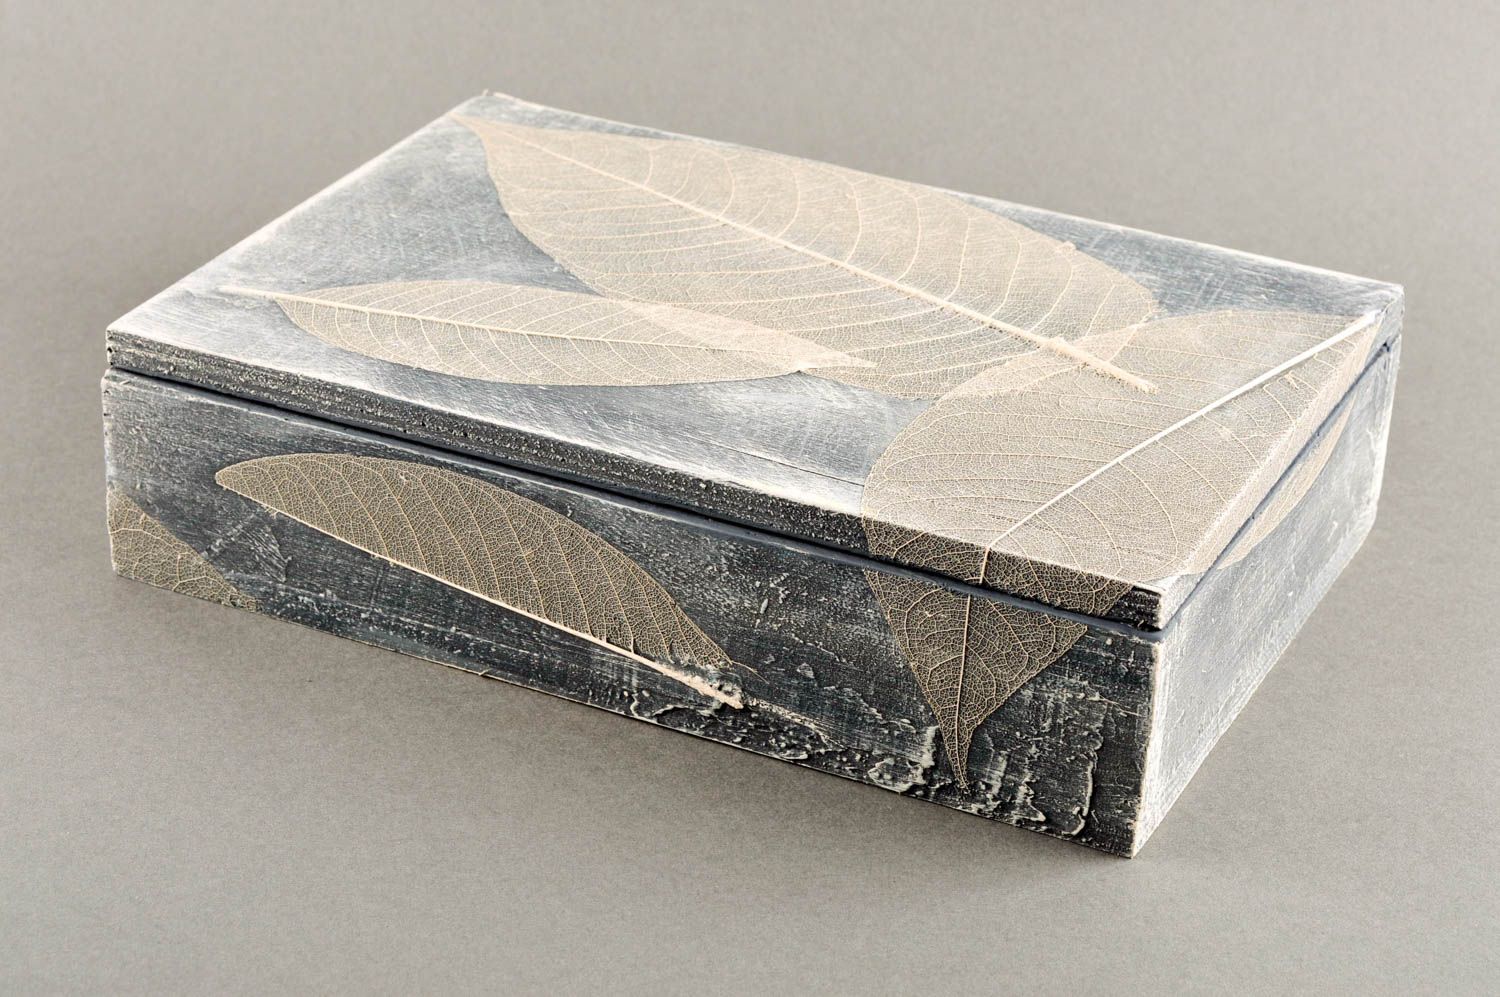 Unusual homemade jewelry box handmade wooden box design home design gift ideas photo 1